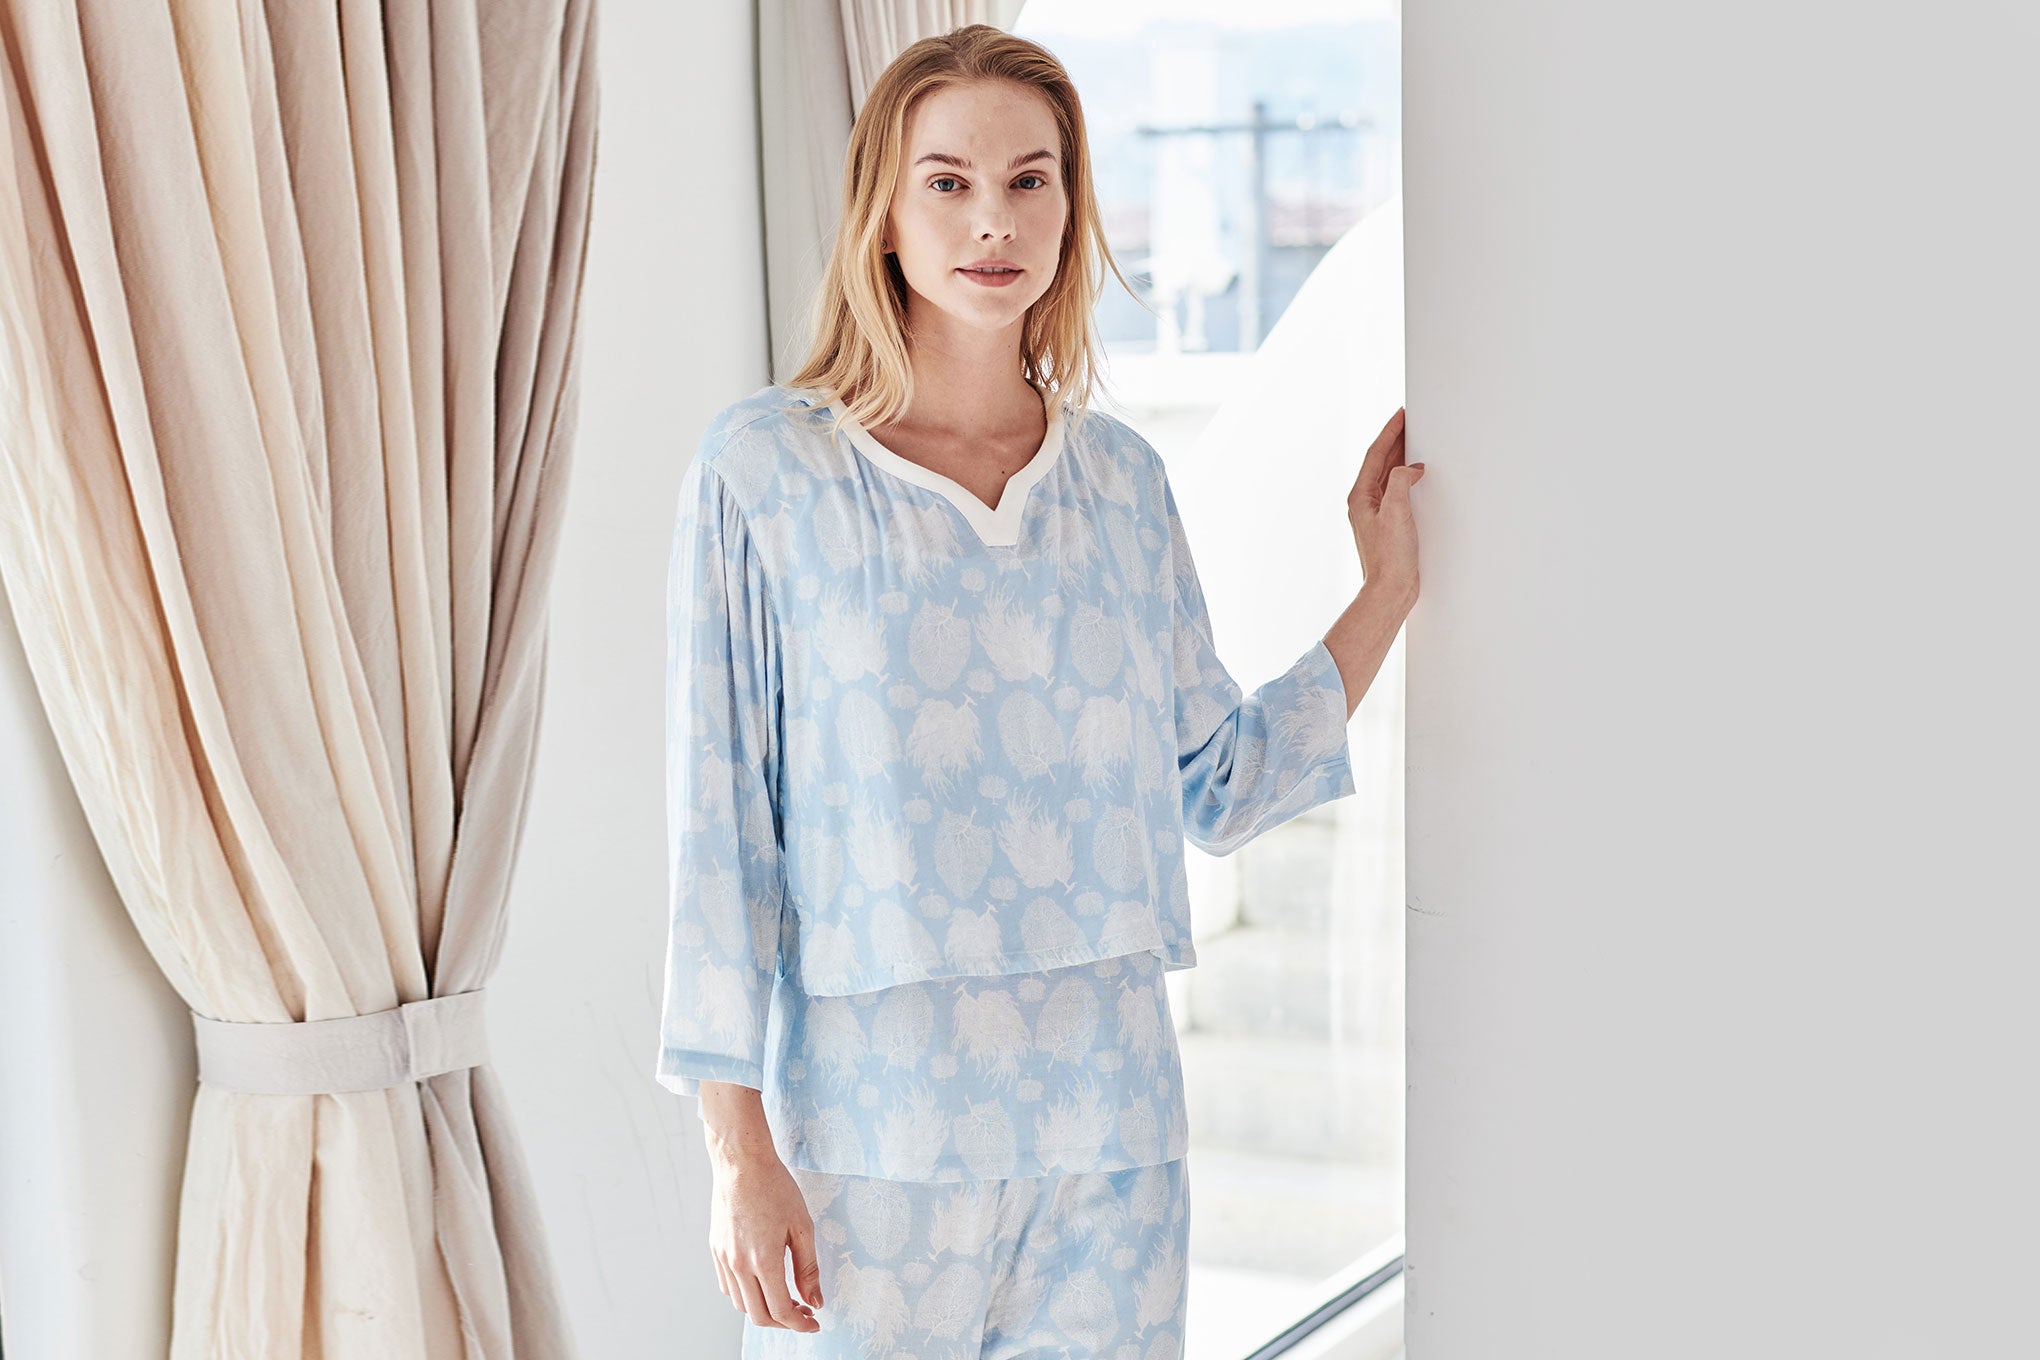 KISSGAL Women's Maternity Nursing Pajama Sets Postpartum Sleepwear for  Breastfeeding Top & Pants 2 Piece Pj S-XXL 